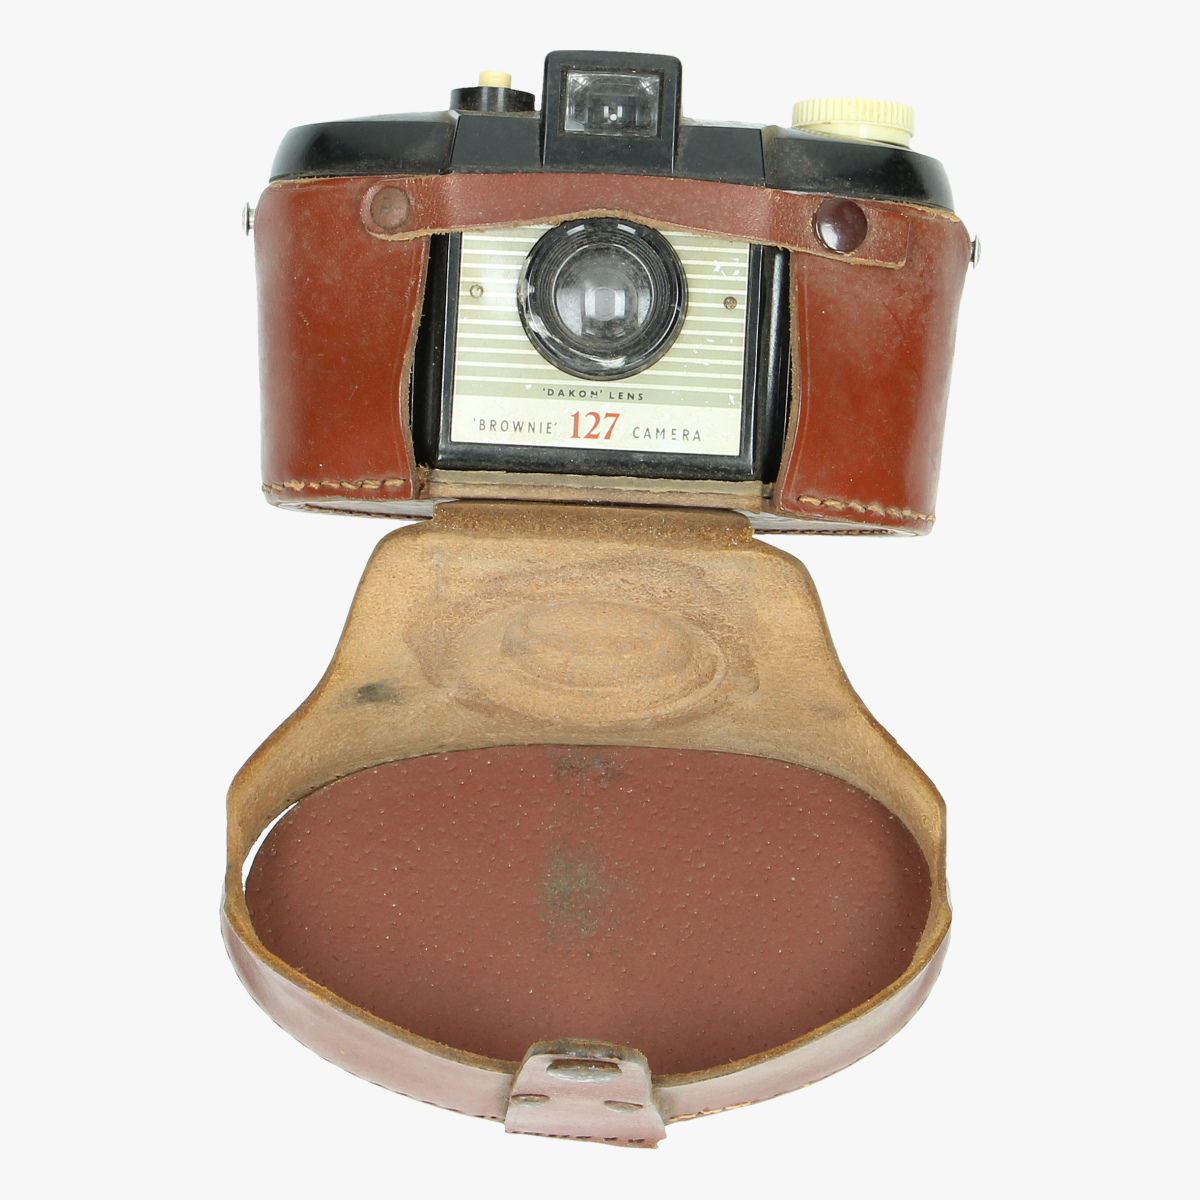 Afbeeldingen van fotocamera brownie 127 dakom lens 